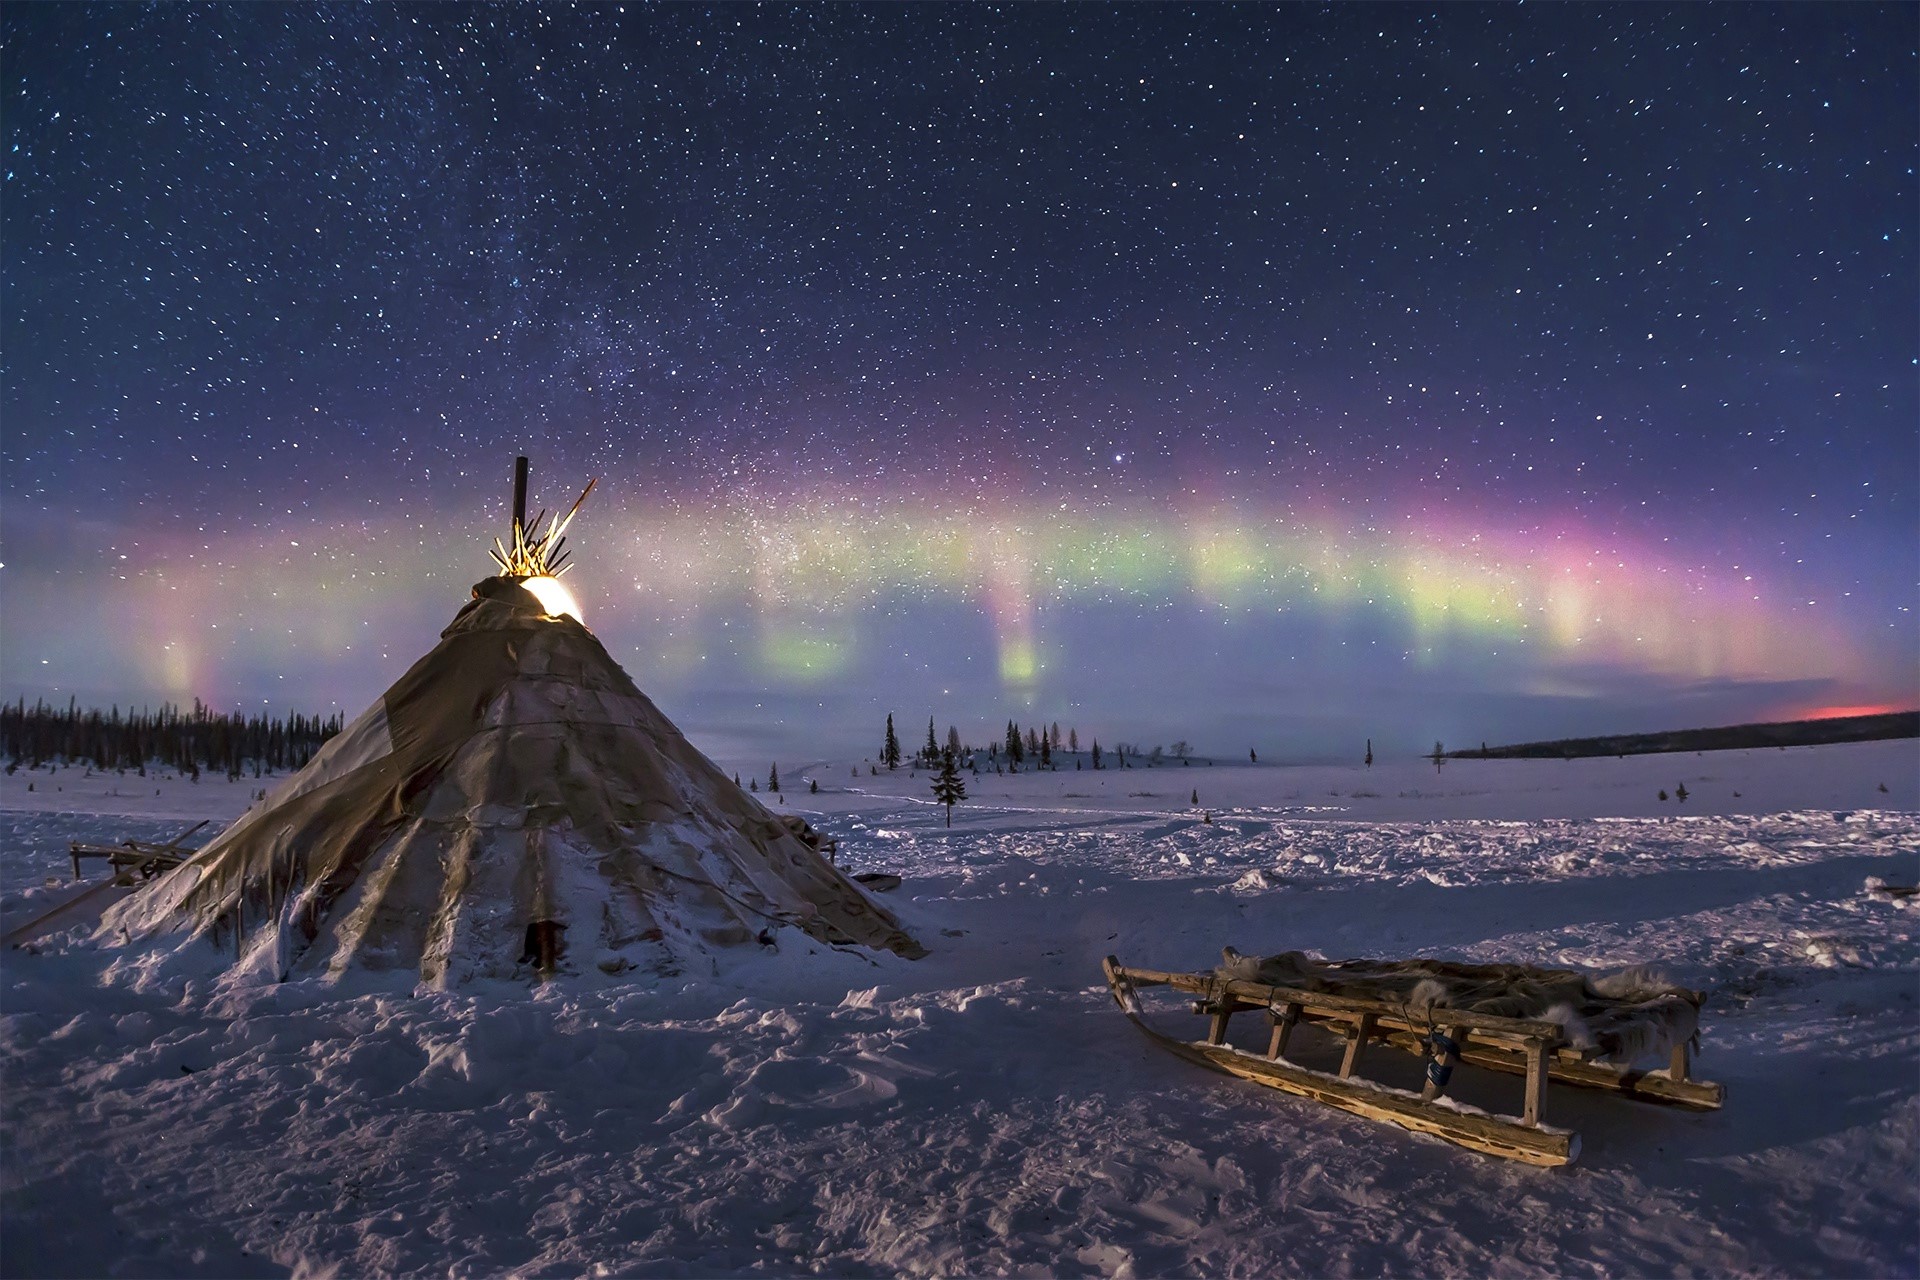 alaska, man made, wigwam, aurora borealis, house, night, sled, snow, starry sky, stars, winter